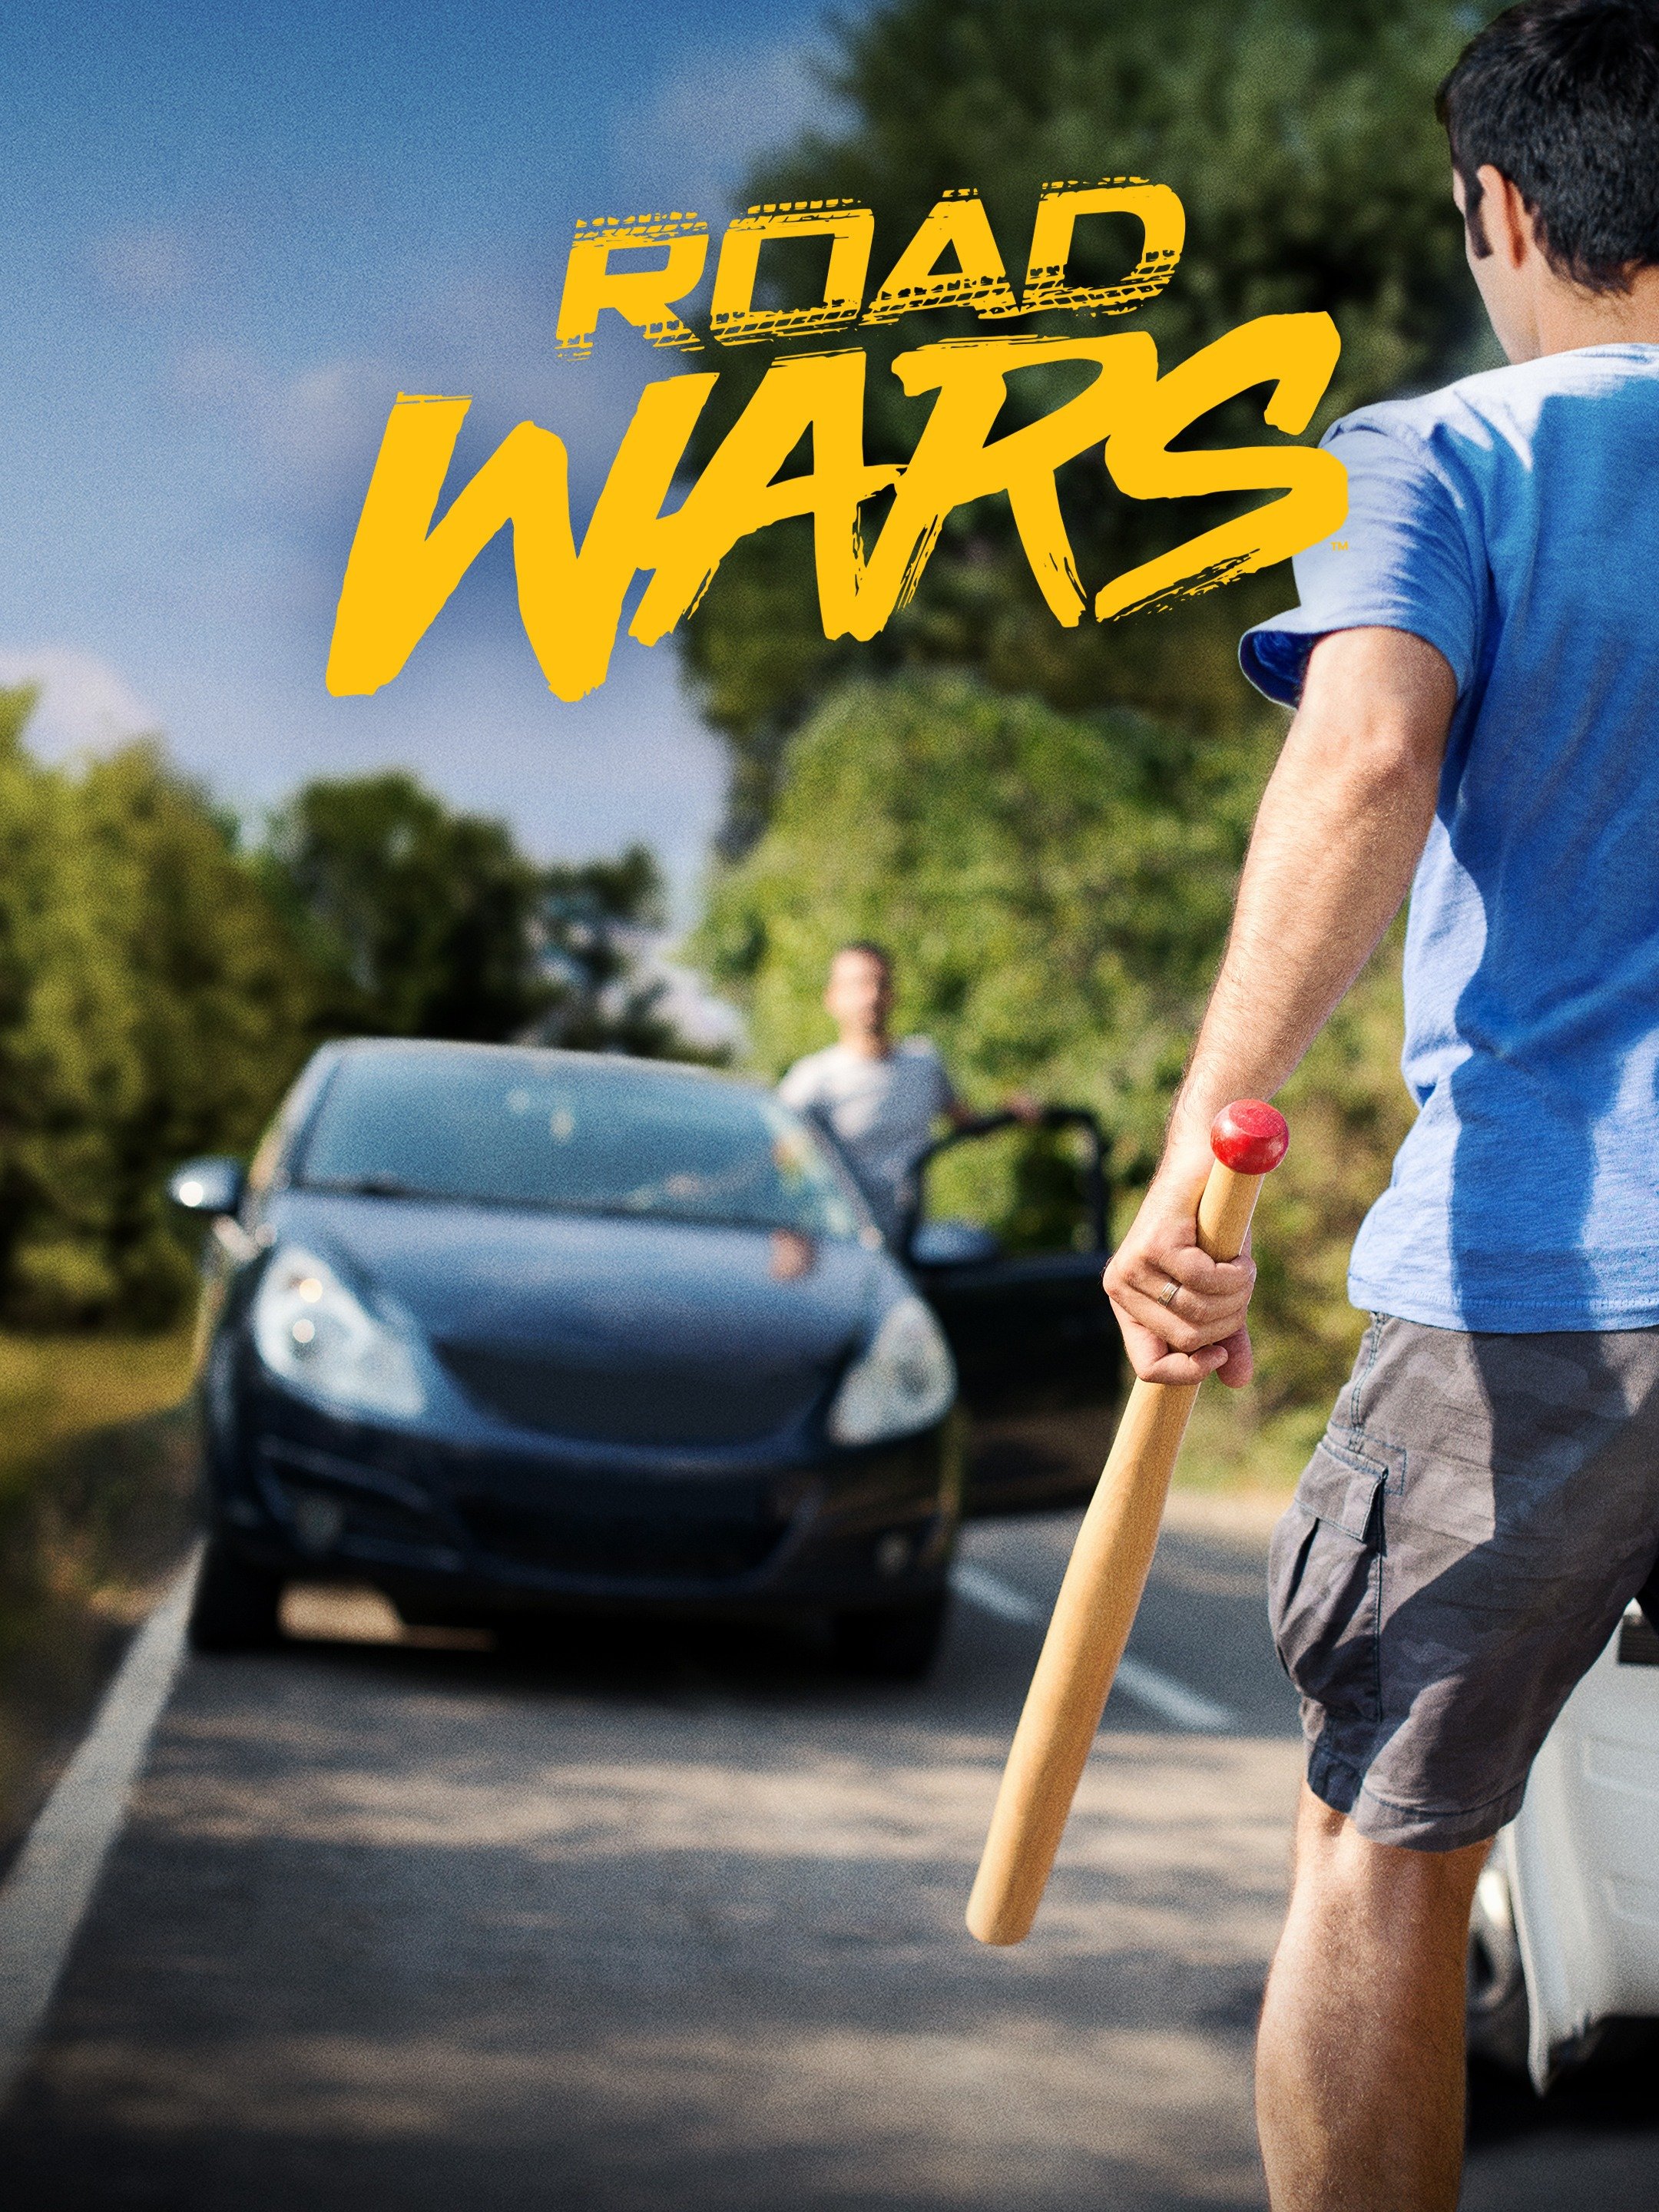 Road Wars Season 1 Episode 3